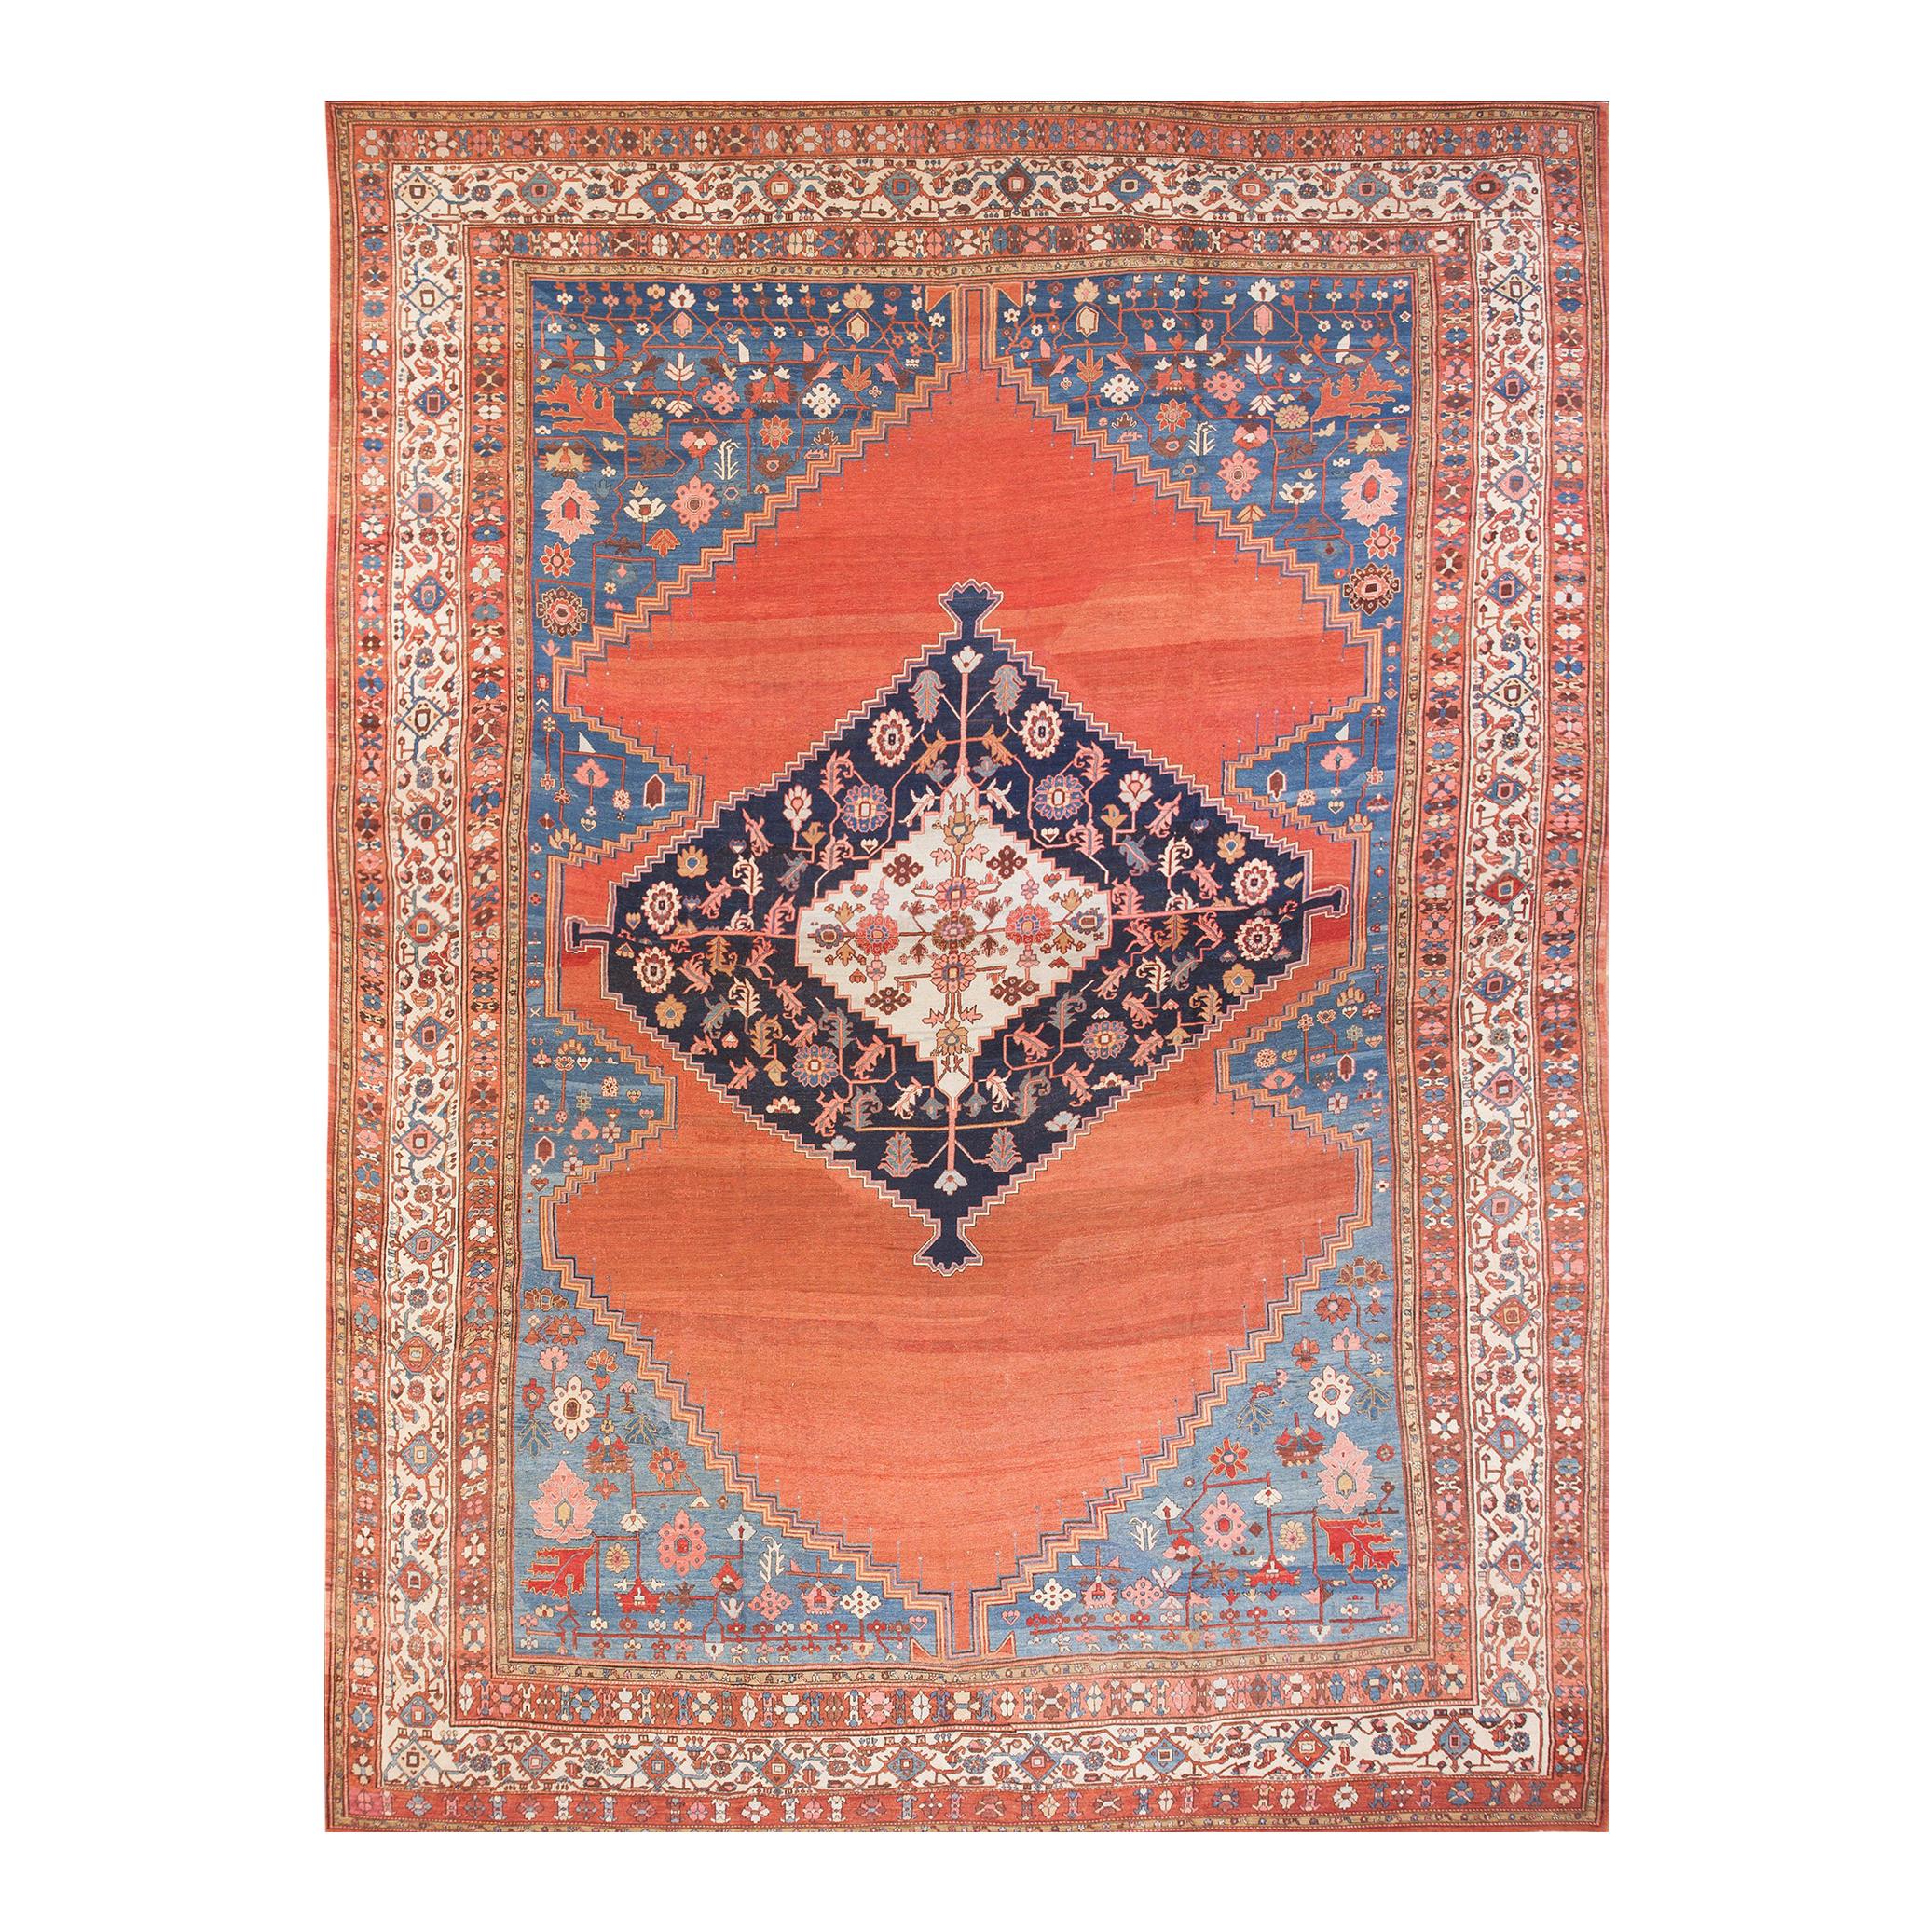 19th Century N.W. Persian  Bakshaiesh Carpet ( 15'8" x 21' - 477 x 640 )